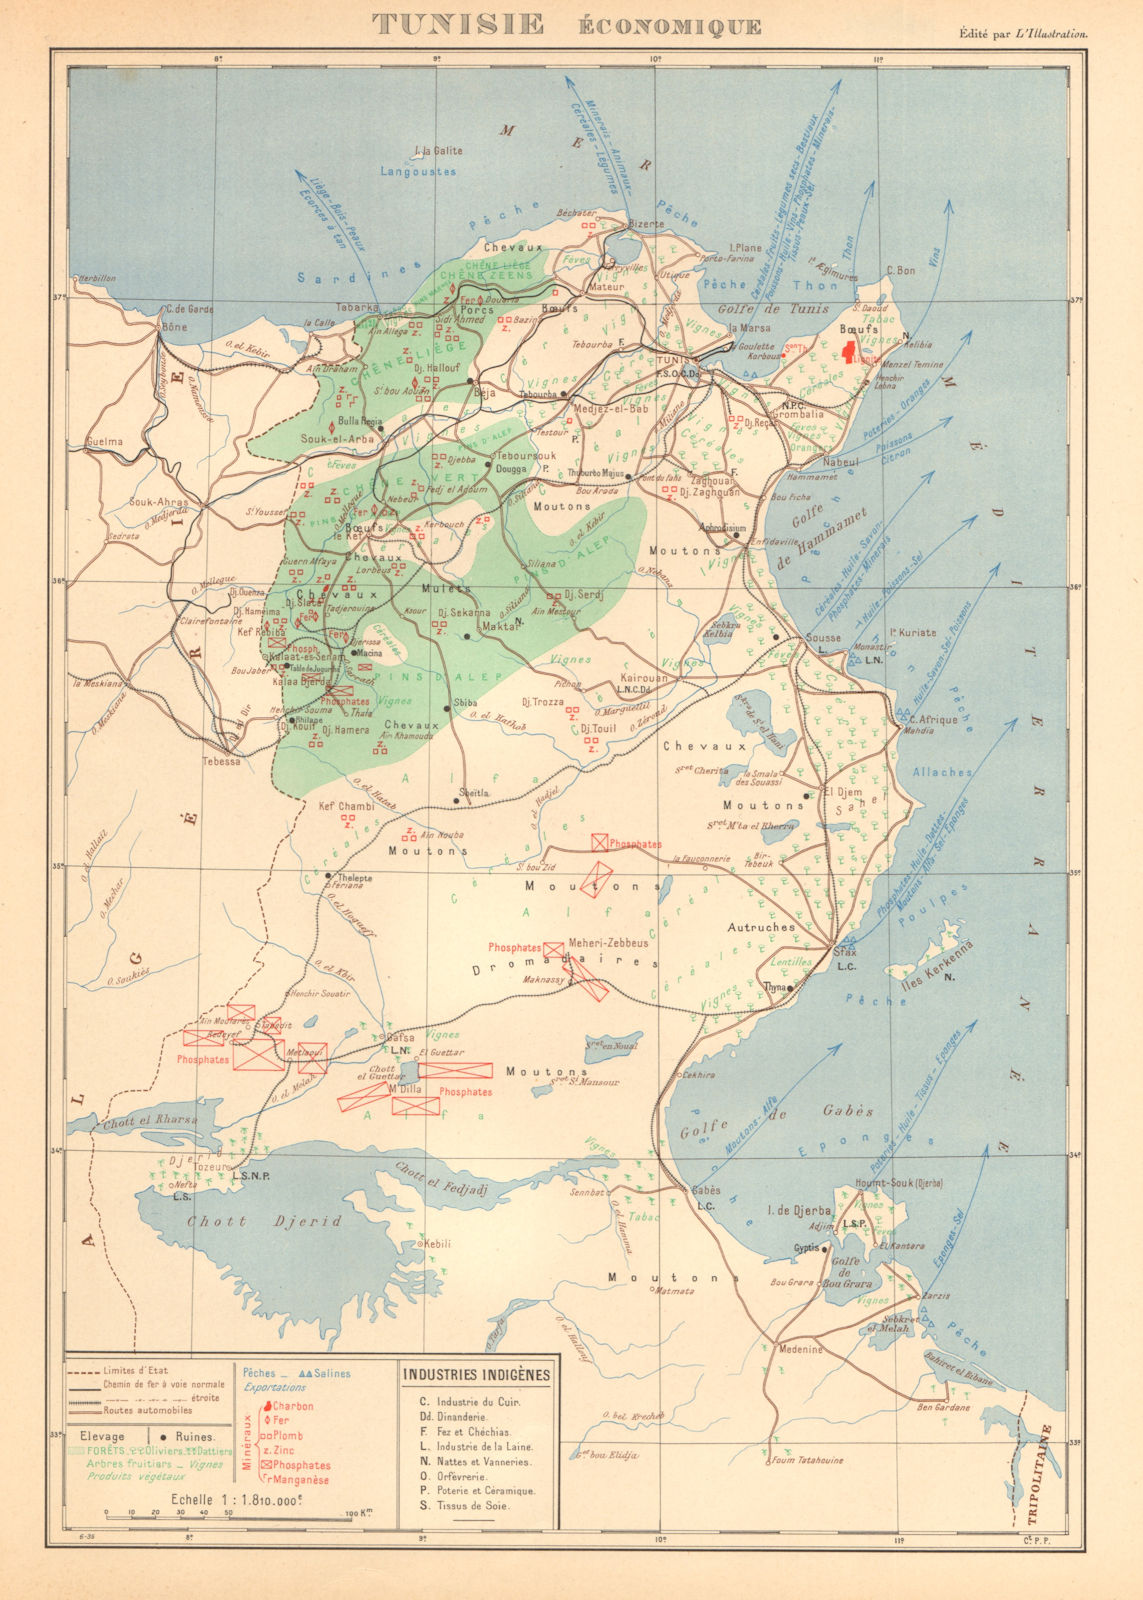 FRENCH COLONIAL TUNISIA RESOURCES. Tunisie. Economique Economic 1938 old map